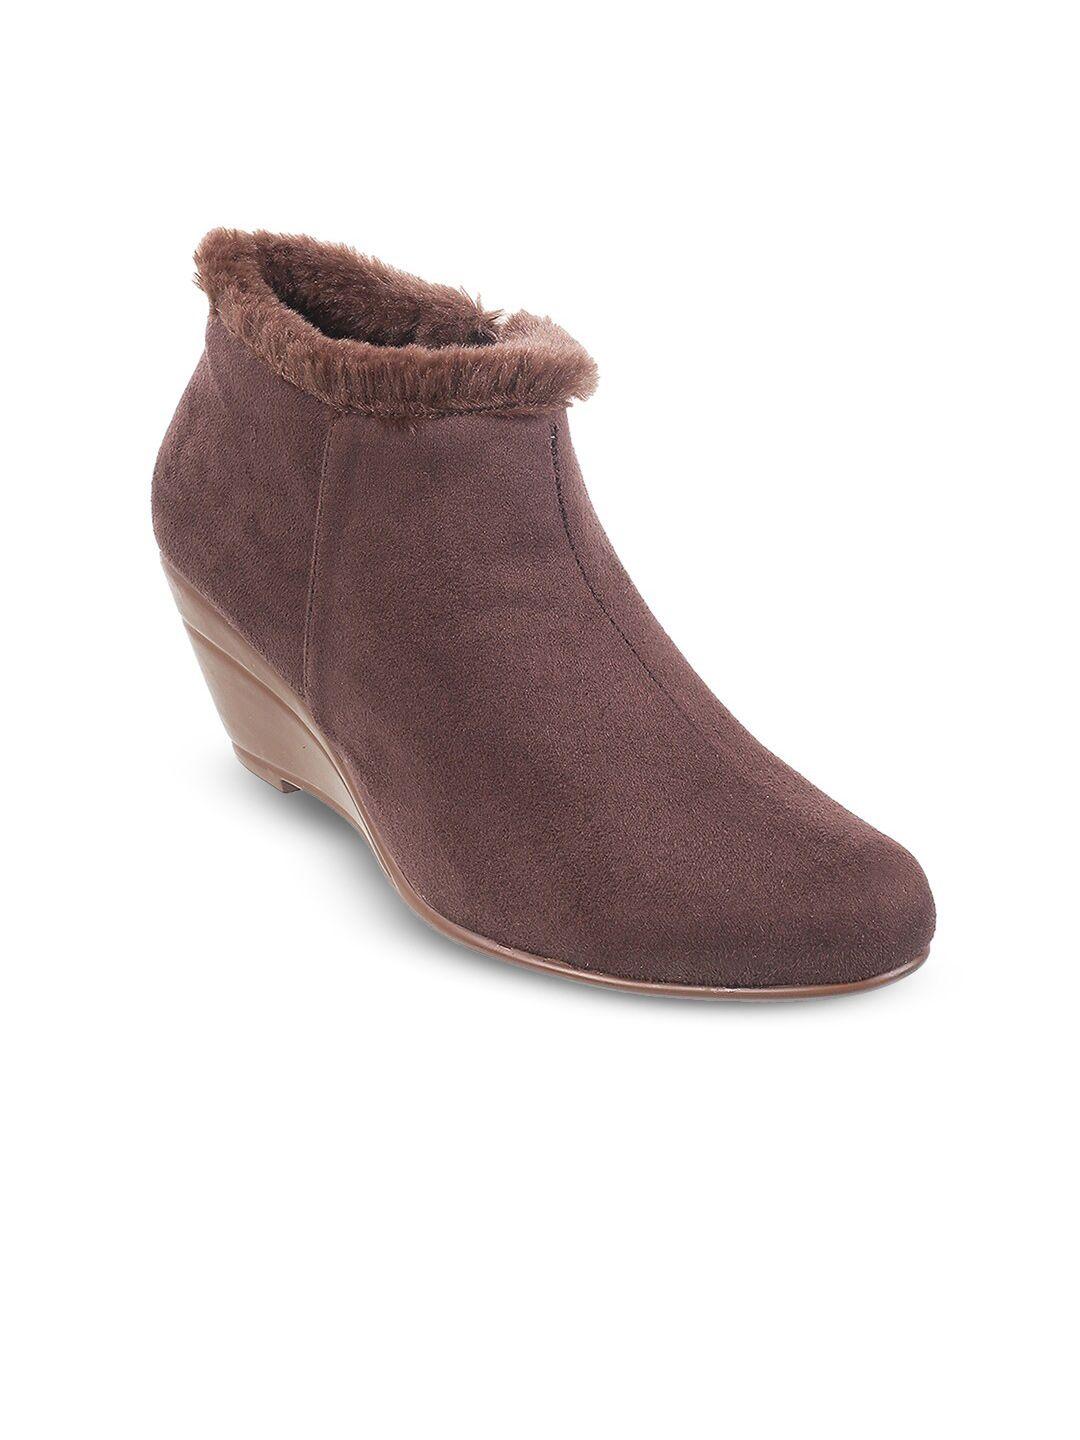 mochi wedge heels winter boots